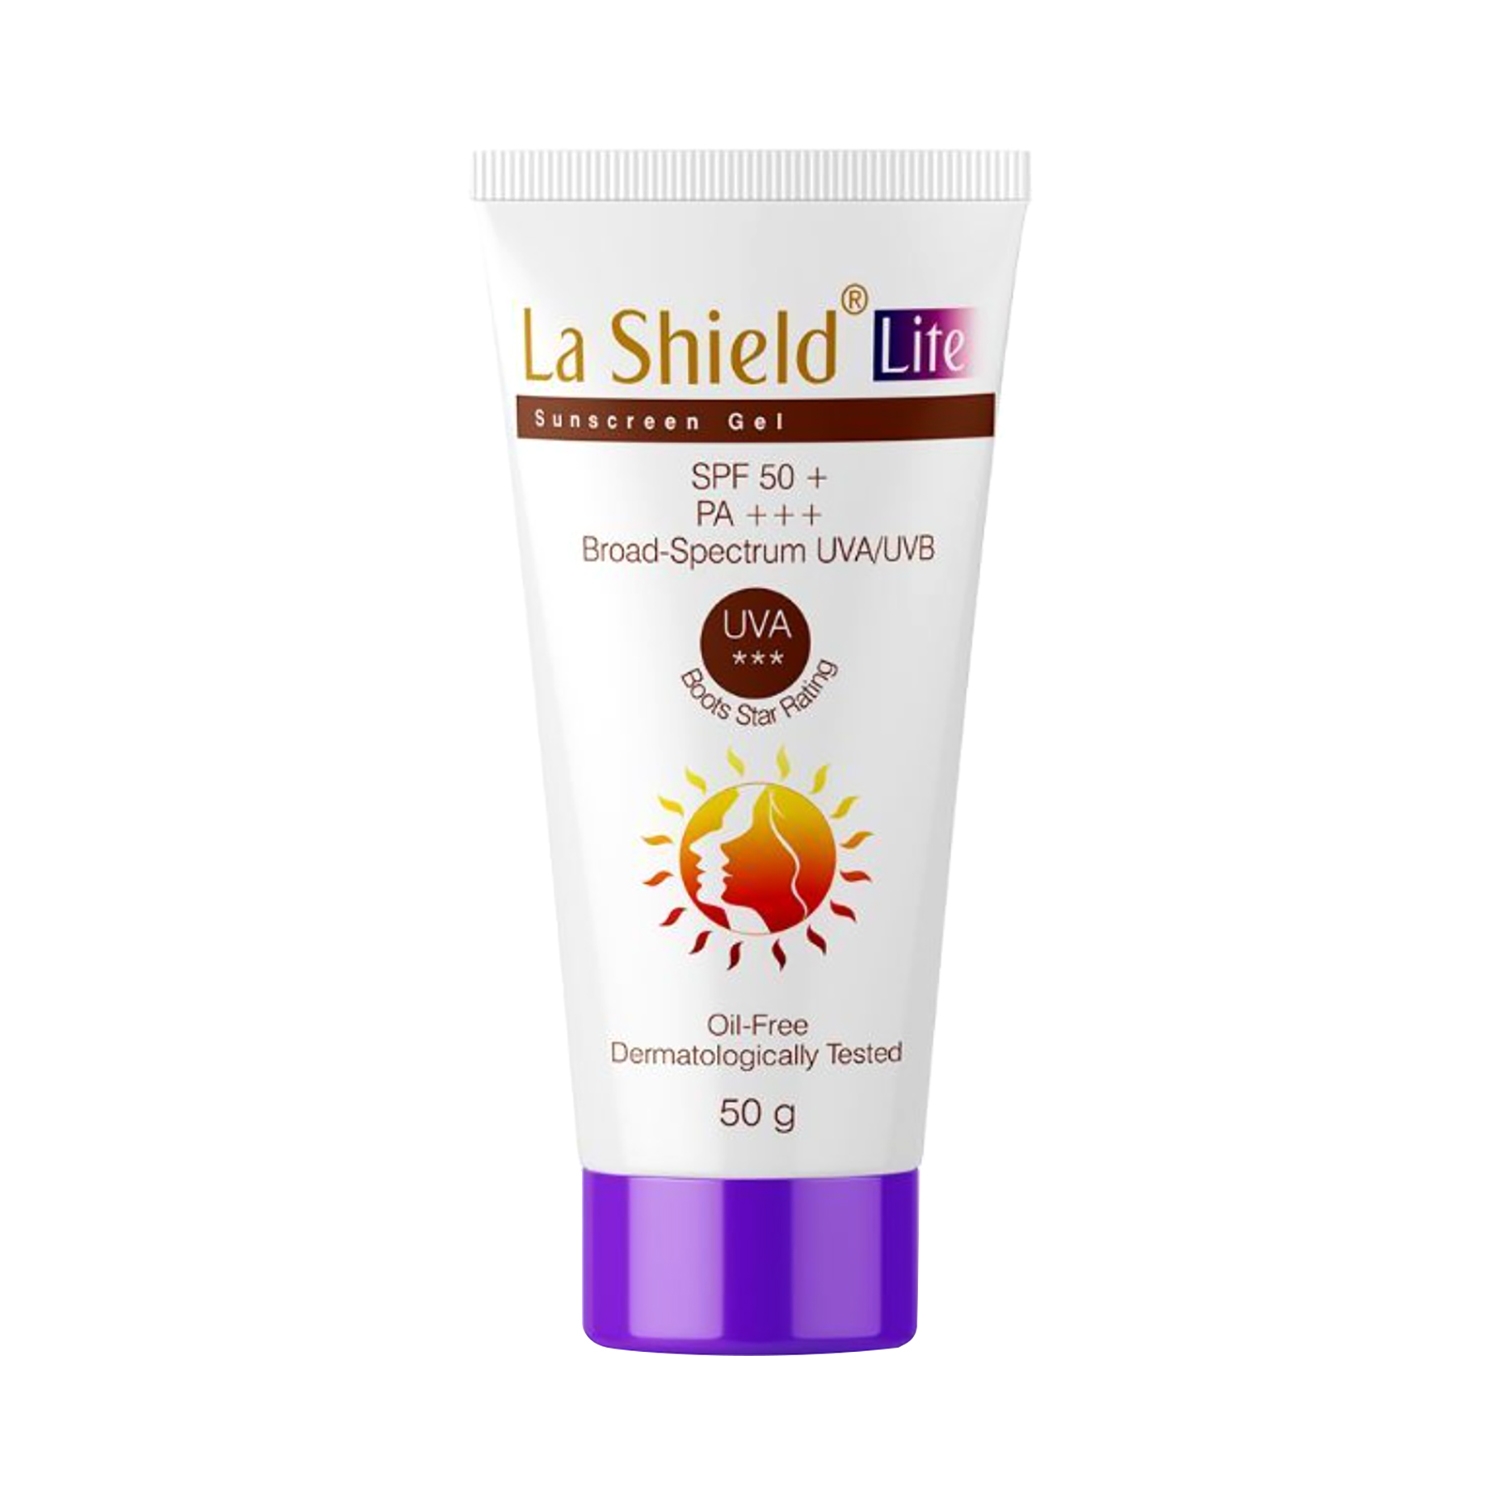 La Shield | La Shield Lite SPF 50+ & PA+++ Sunscreen Gel (50g)